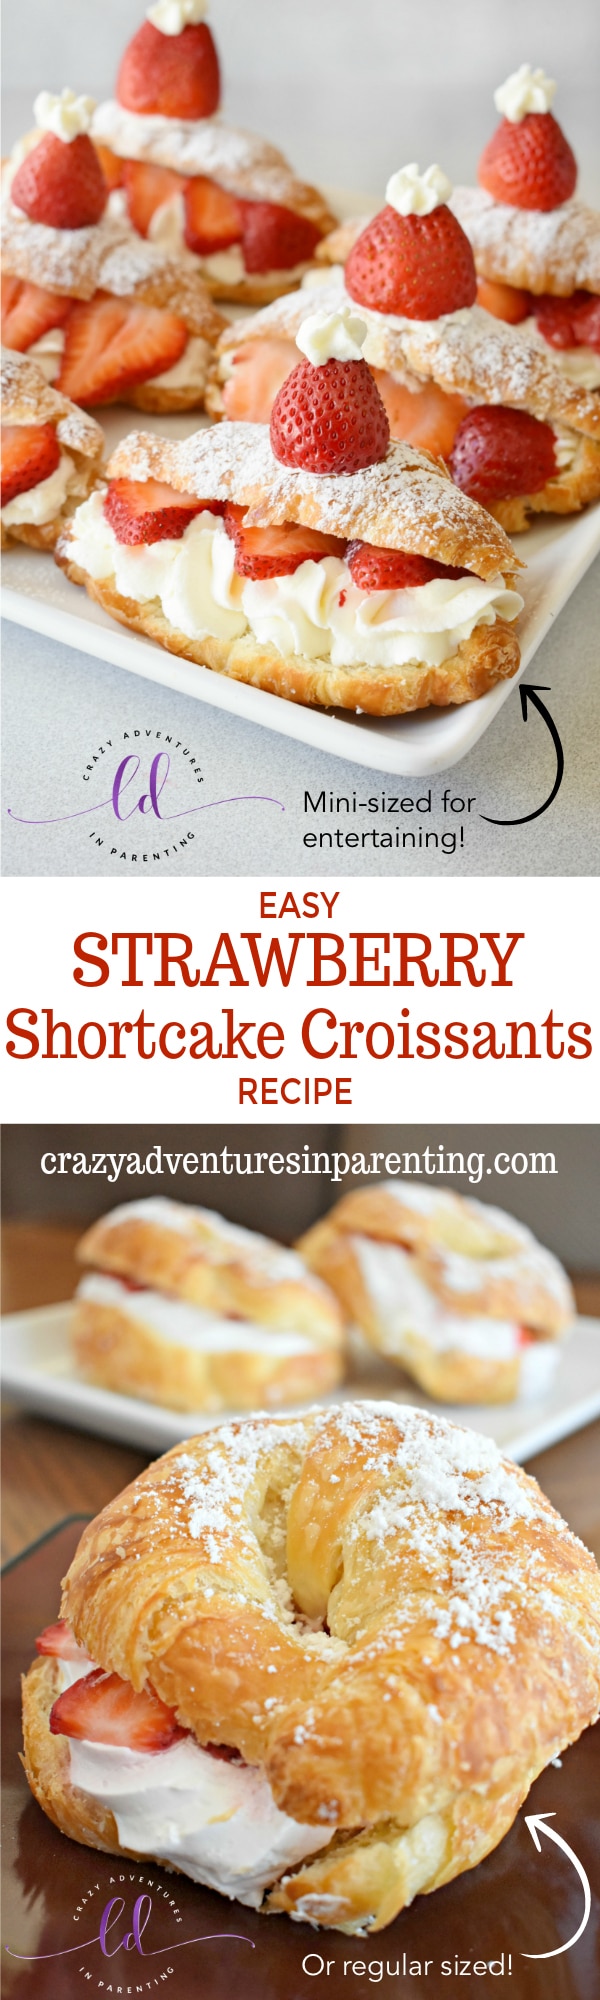 Easy Strawberry Shortcake Croissants Recipe Made Two Ways